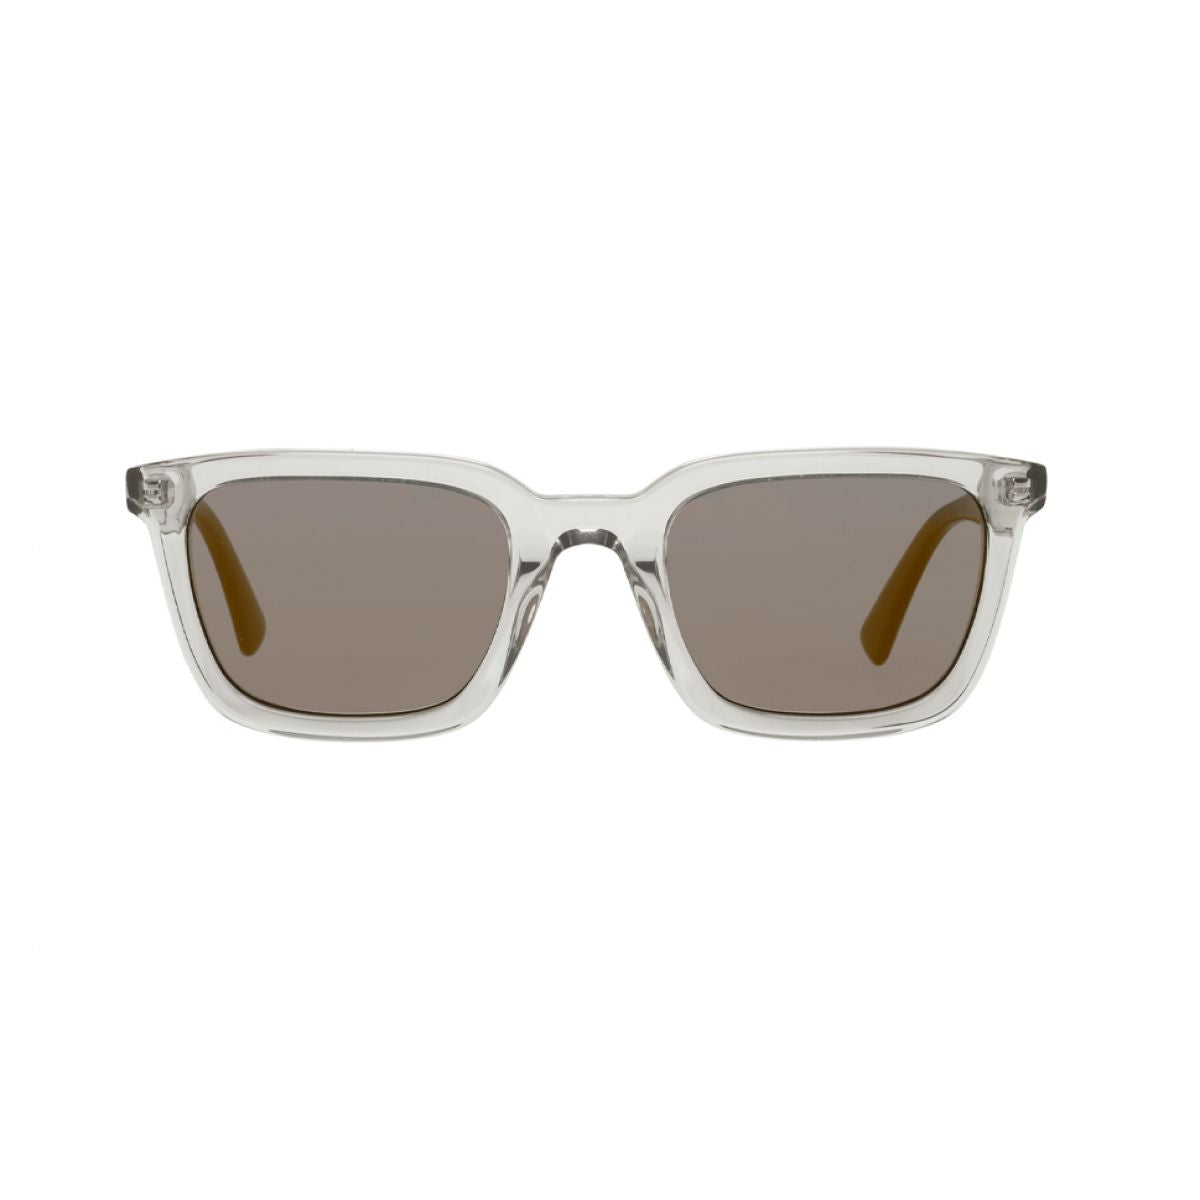 Diesel Sunglasses DL0282 20C 51 Maat 51x23x145